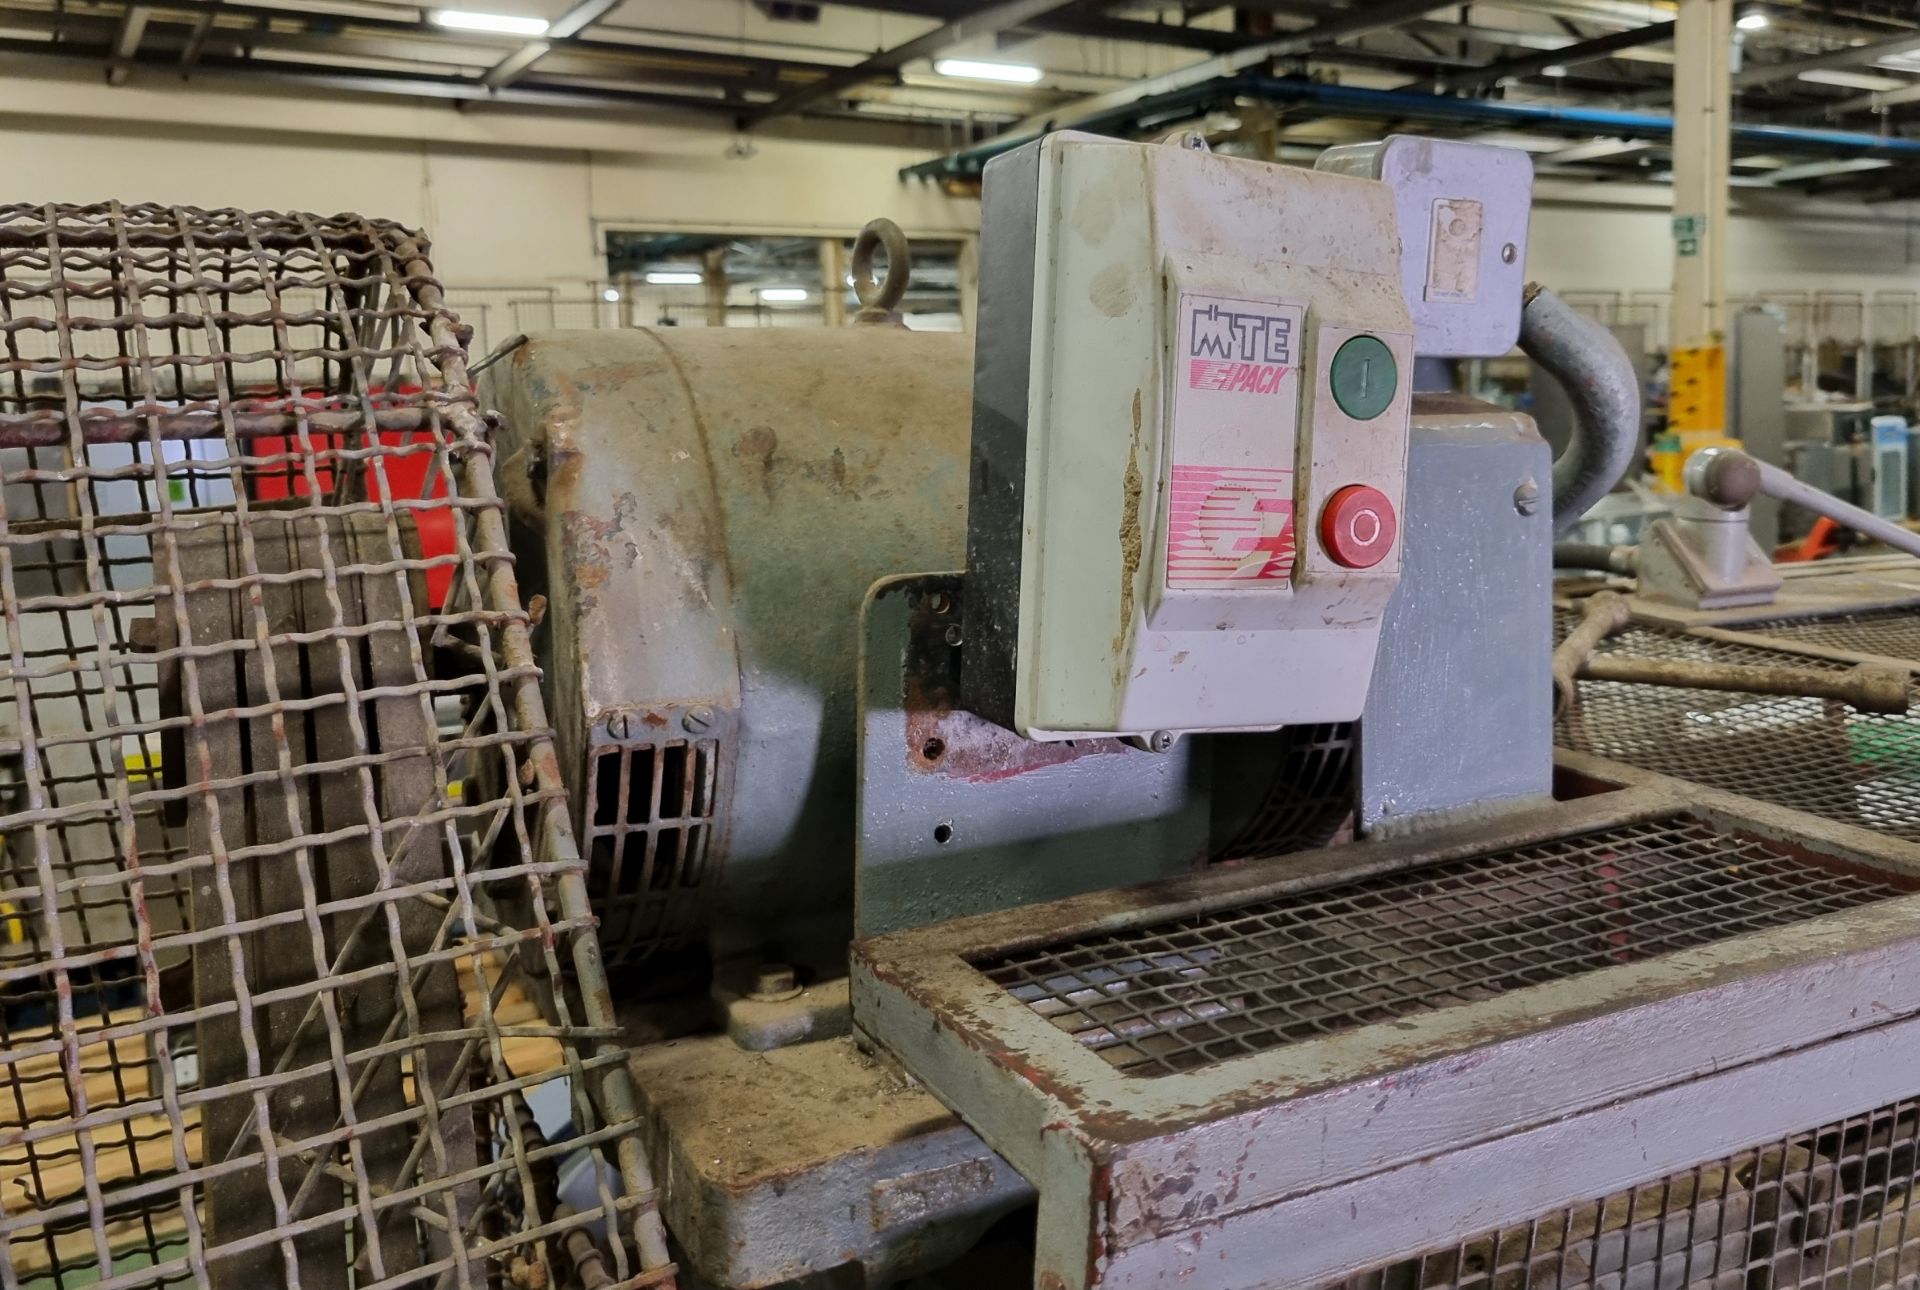 BMM Weston L1566 industrial laundry press - 440V - W 1650 x D 1000 x H 1350mm - Image 13 of 15